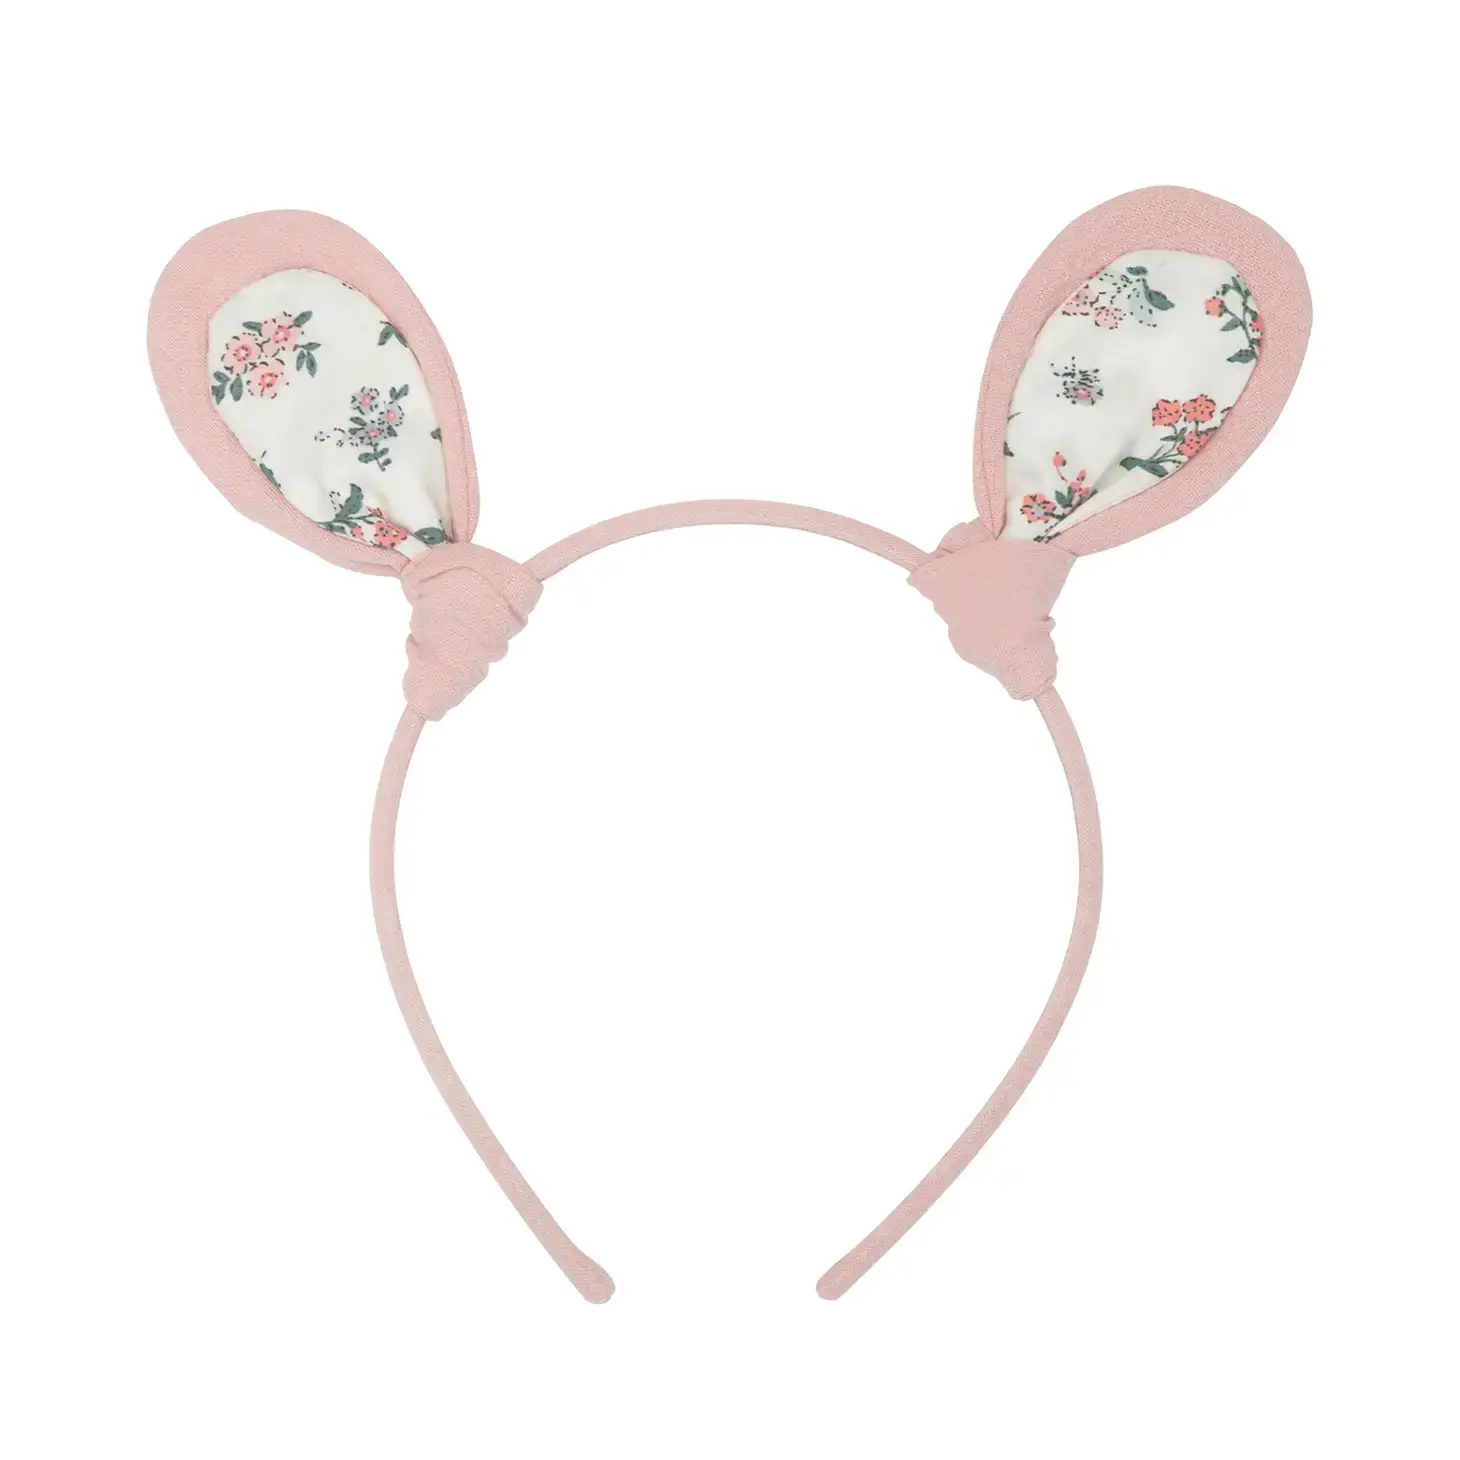 Rockahula Flora Bunny Ears Headband